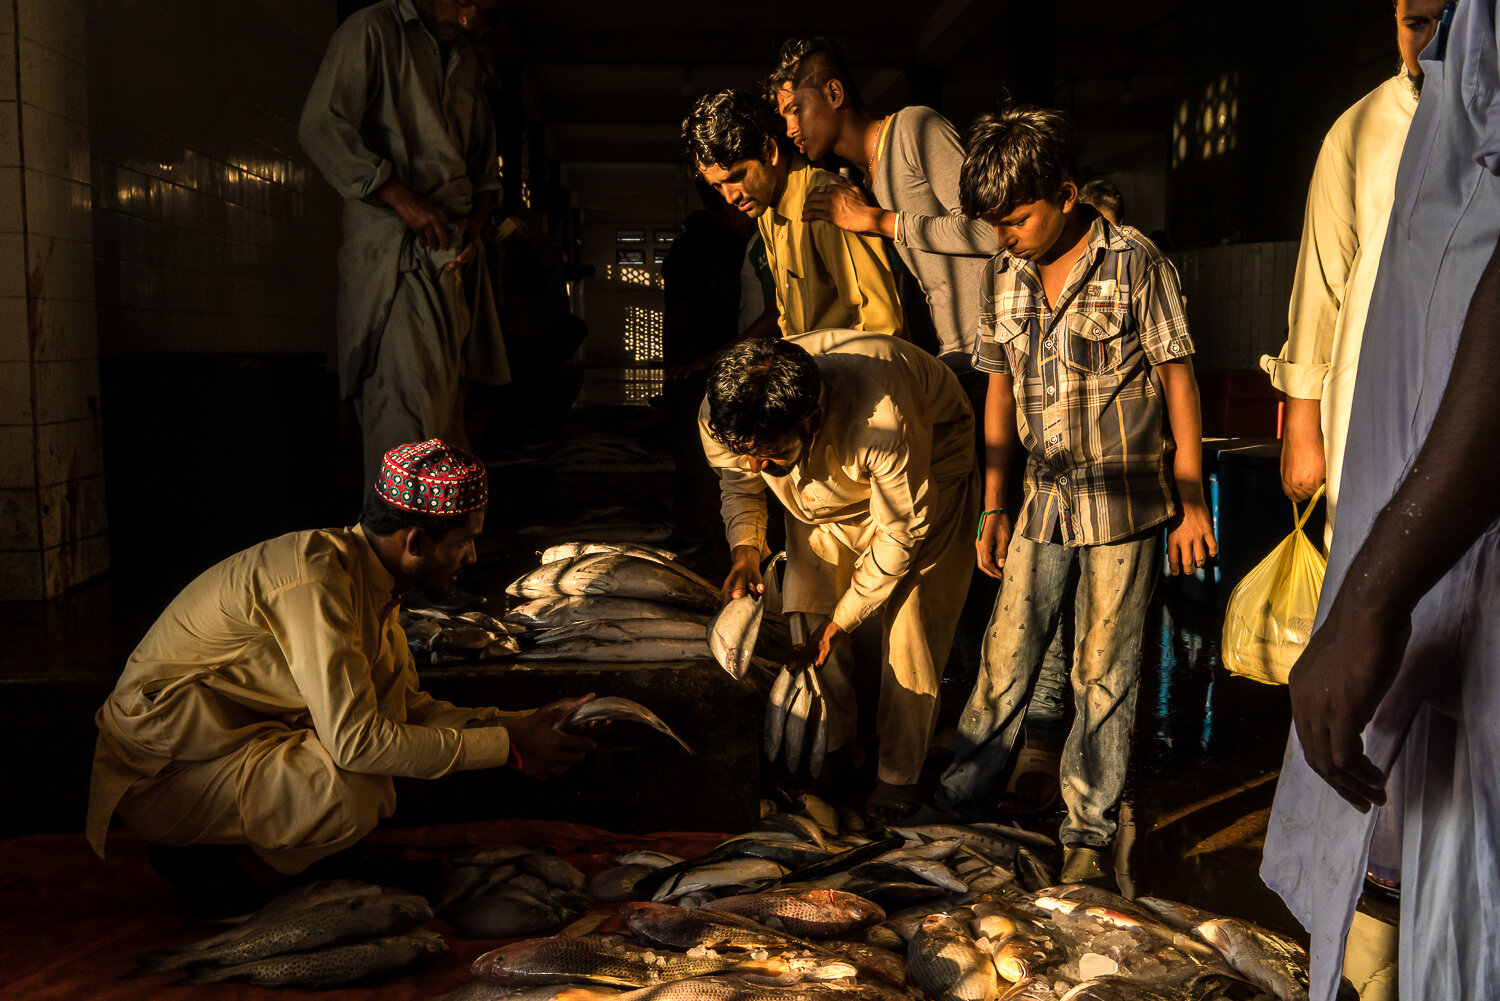  Buyers inspect fish for sale in the main Karachi fish market on Saturday, October 12, 2019 in Karachi, Sindh, Pakistan. 